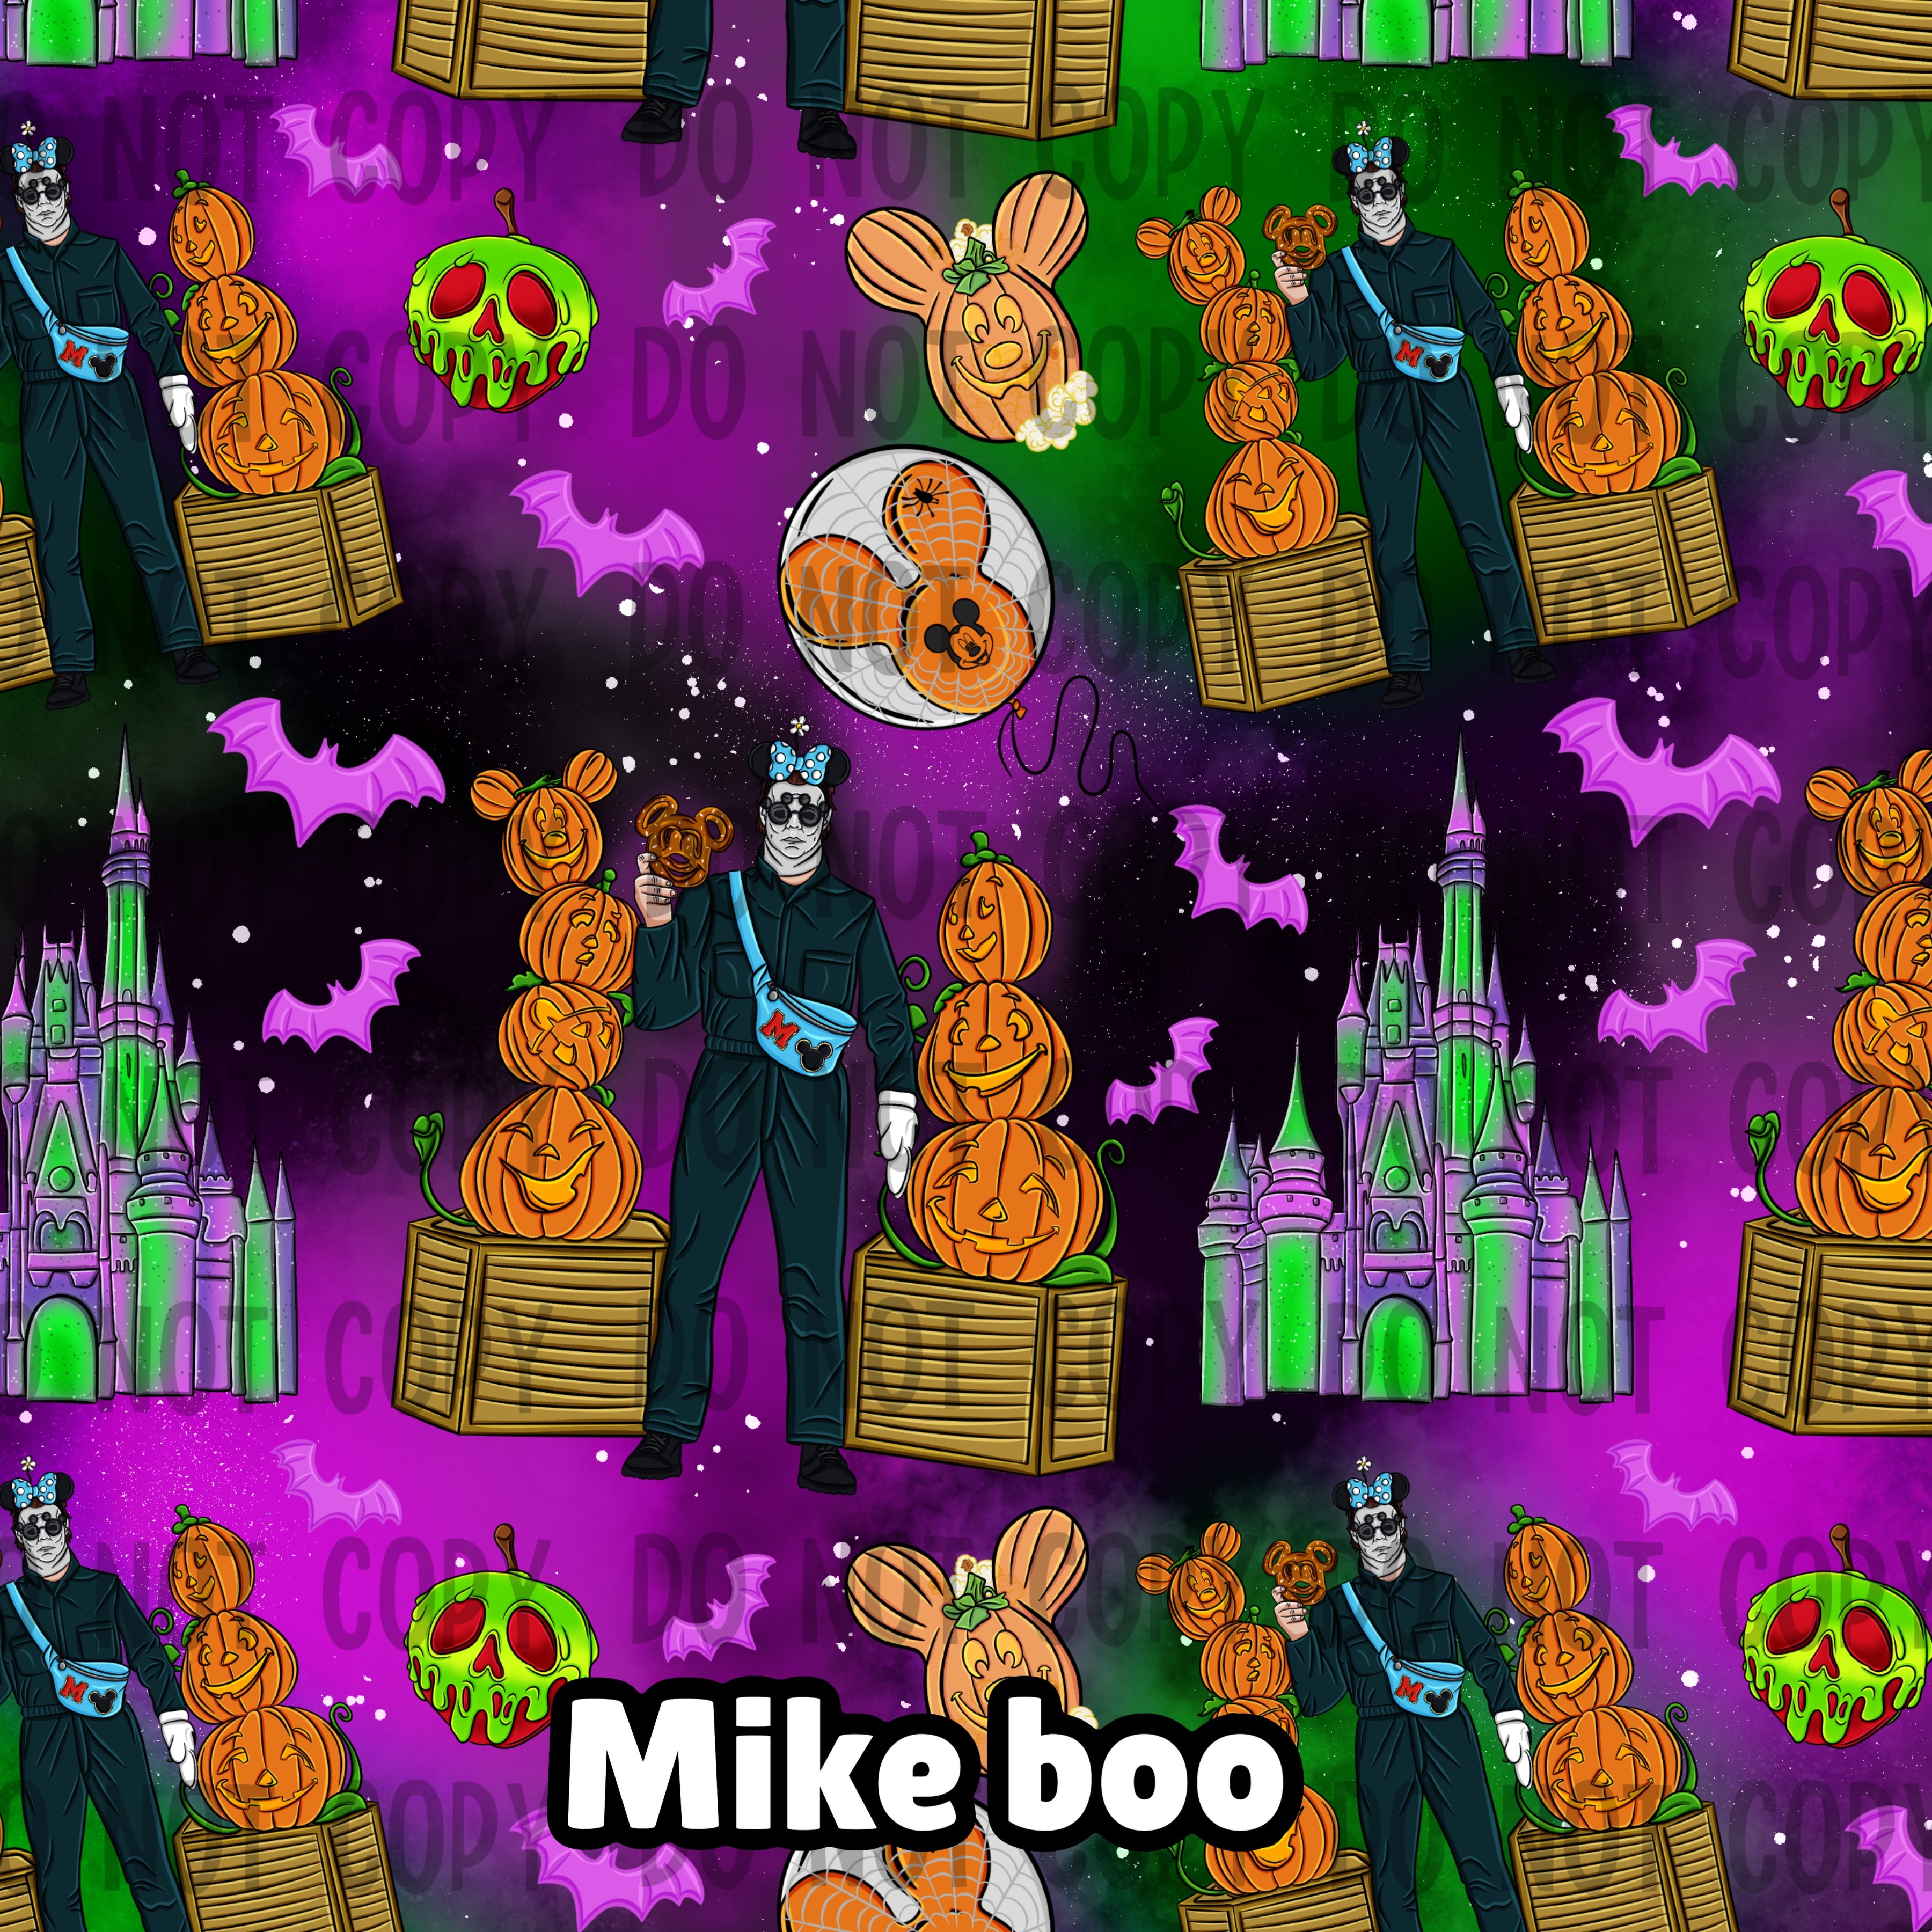 Mike boo